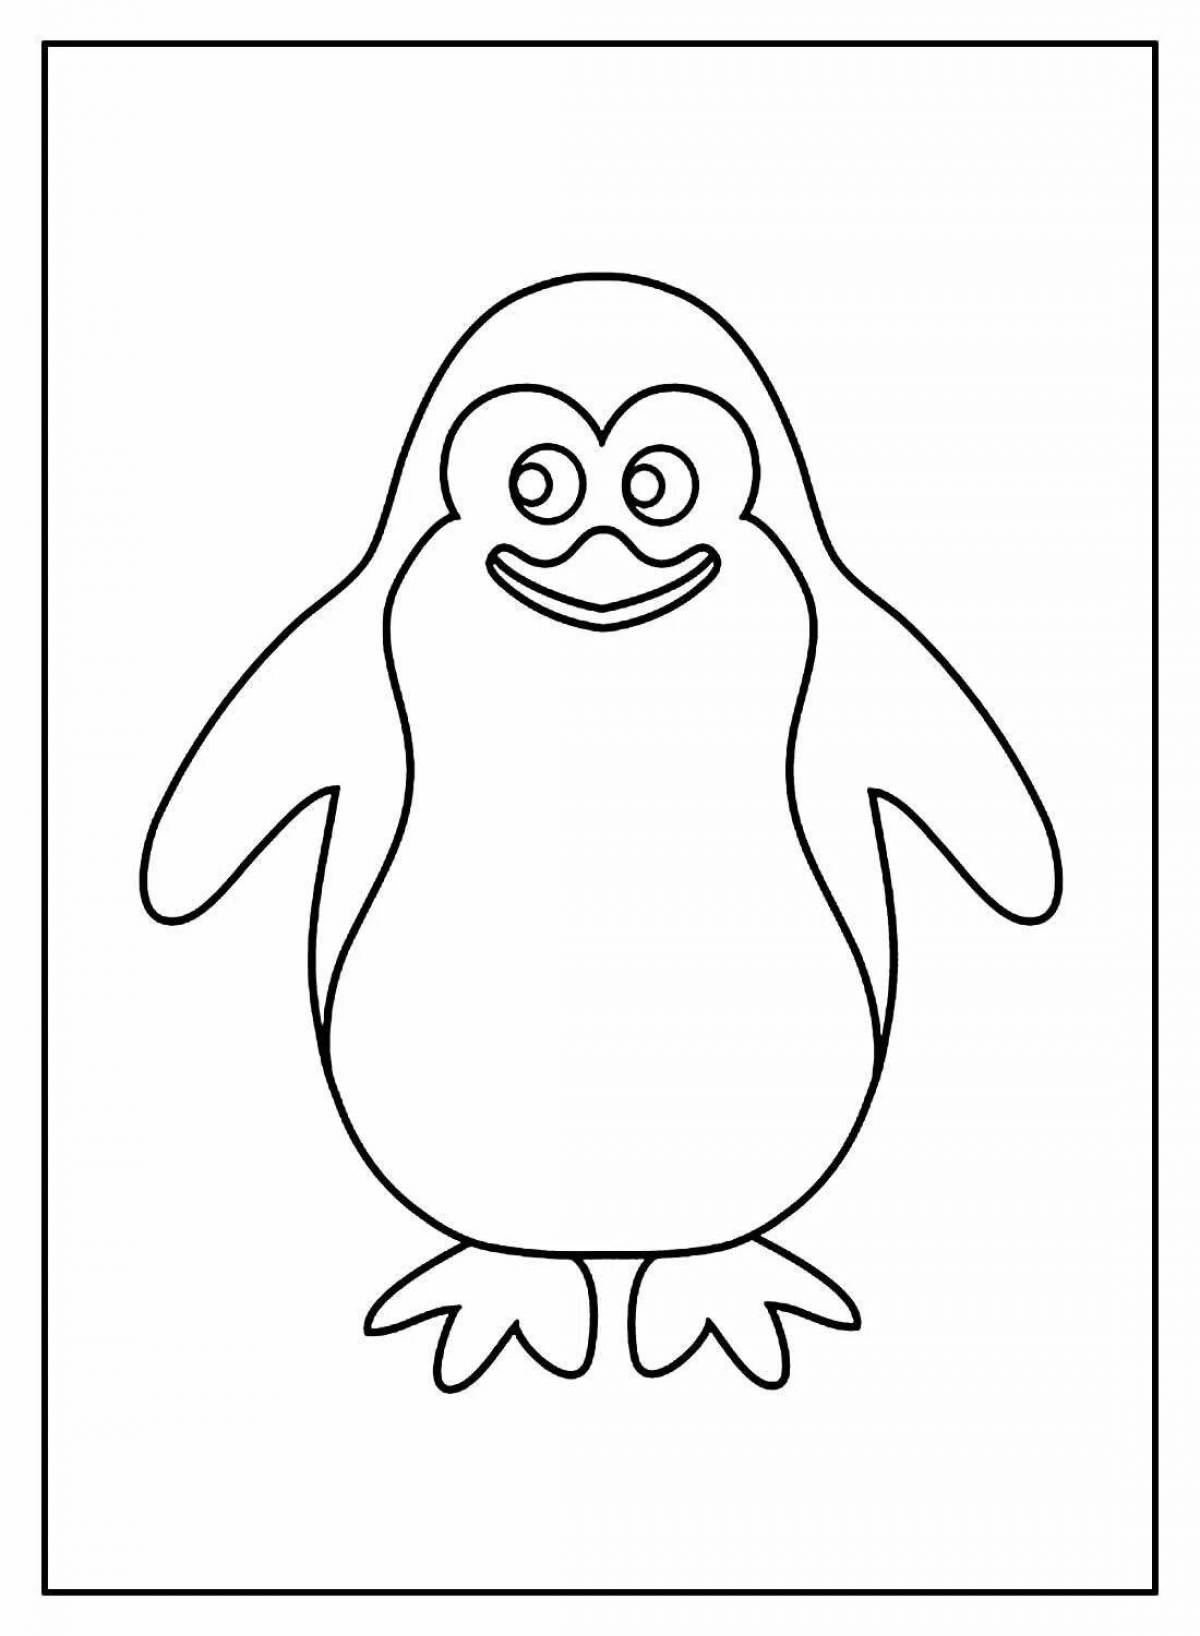 Penguin pattern #7